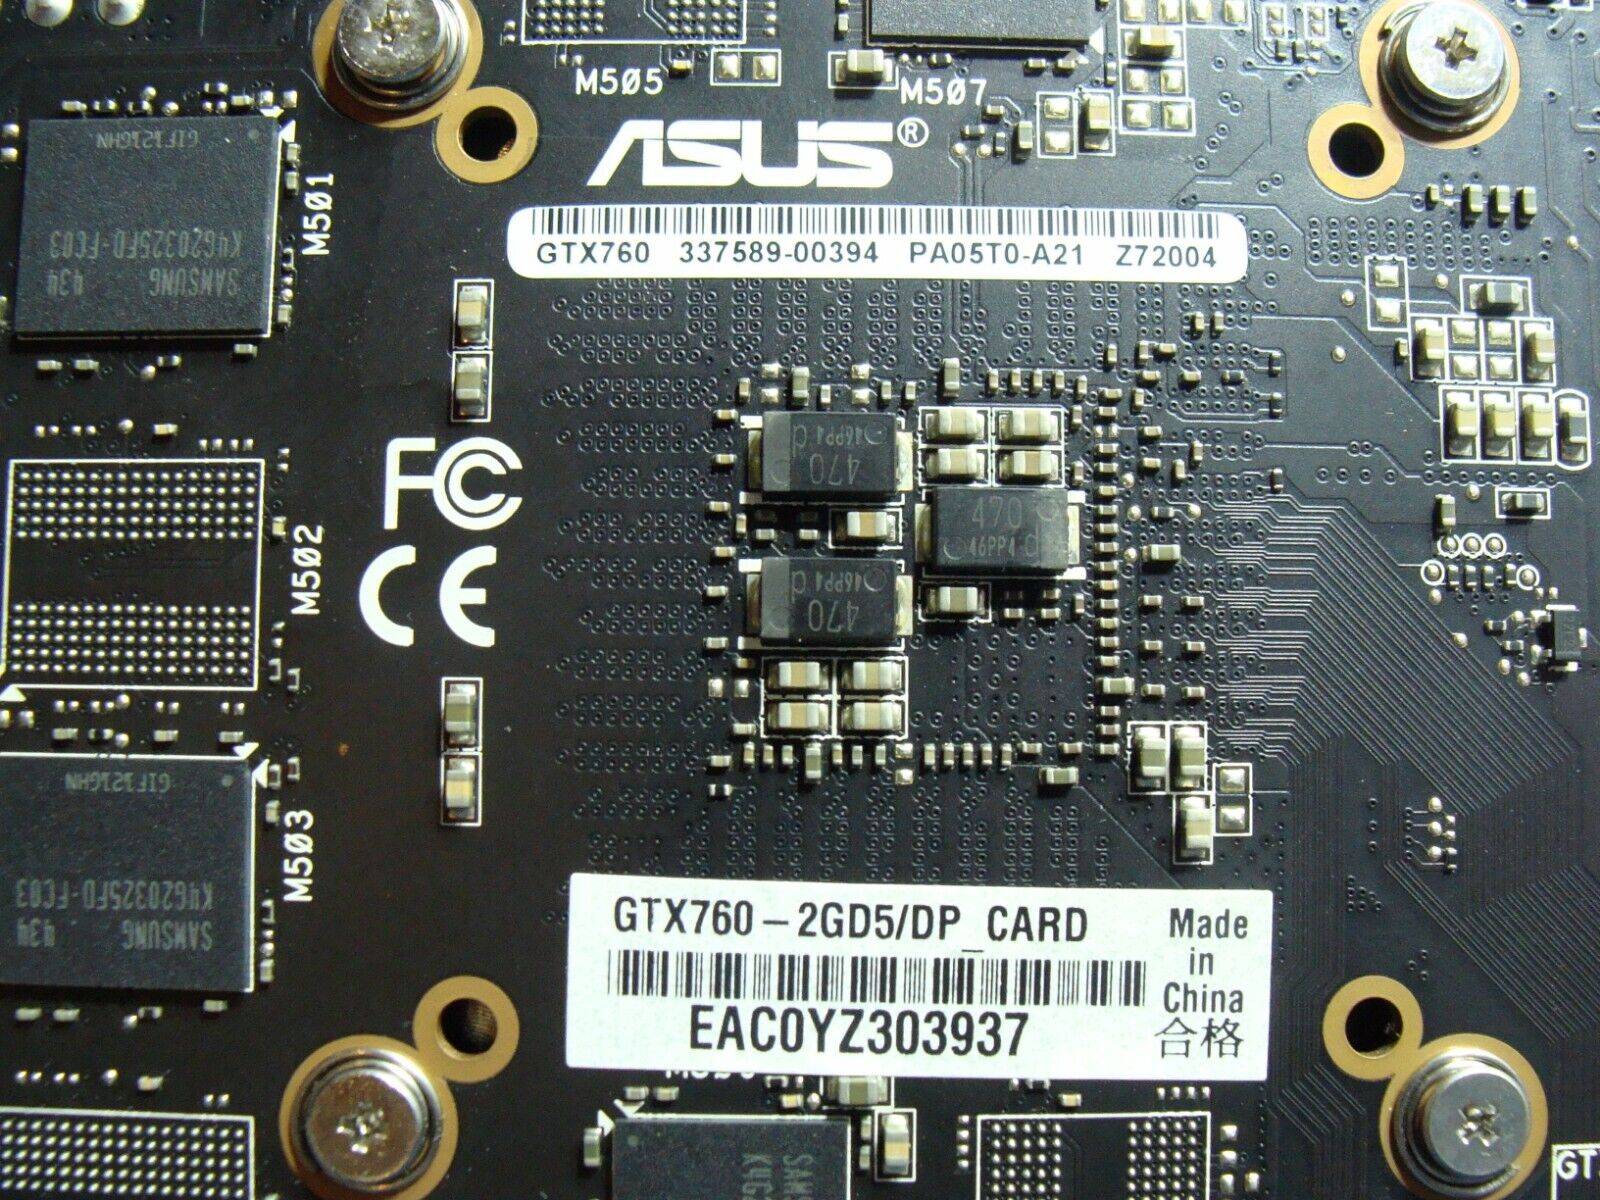 Asus ROG G20AJ NVIDIA GeForce GTX 760 2GB GDDR5 PCIe Video Card DTX760-2GB5/DP